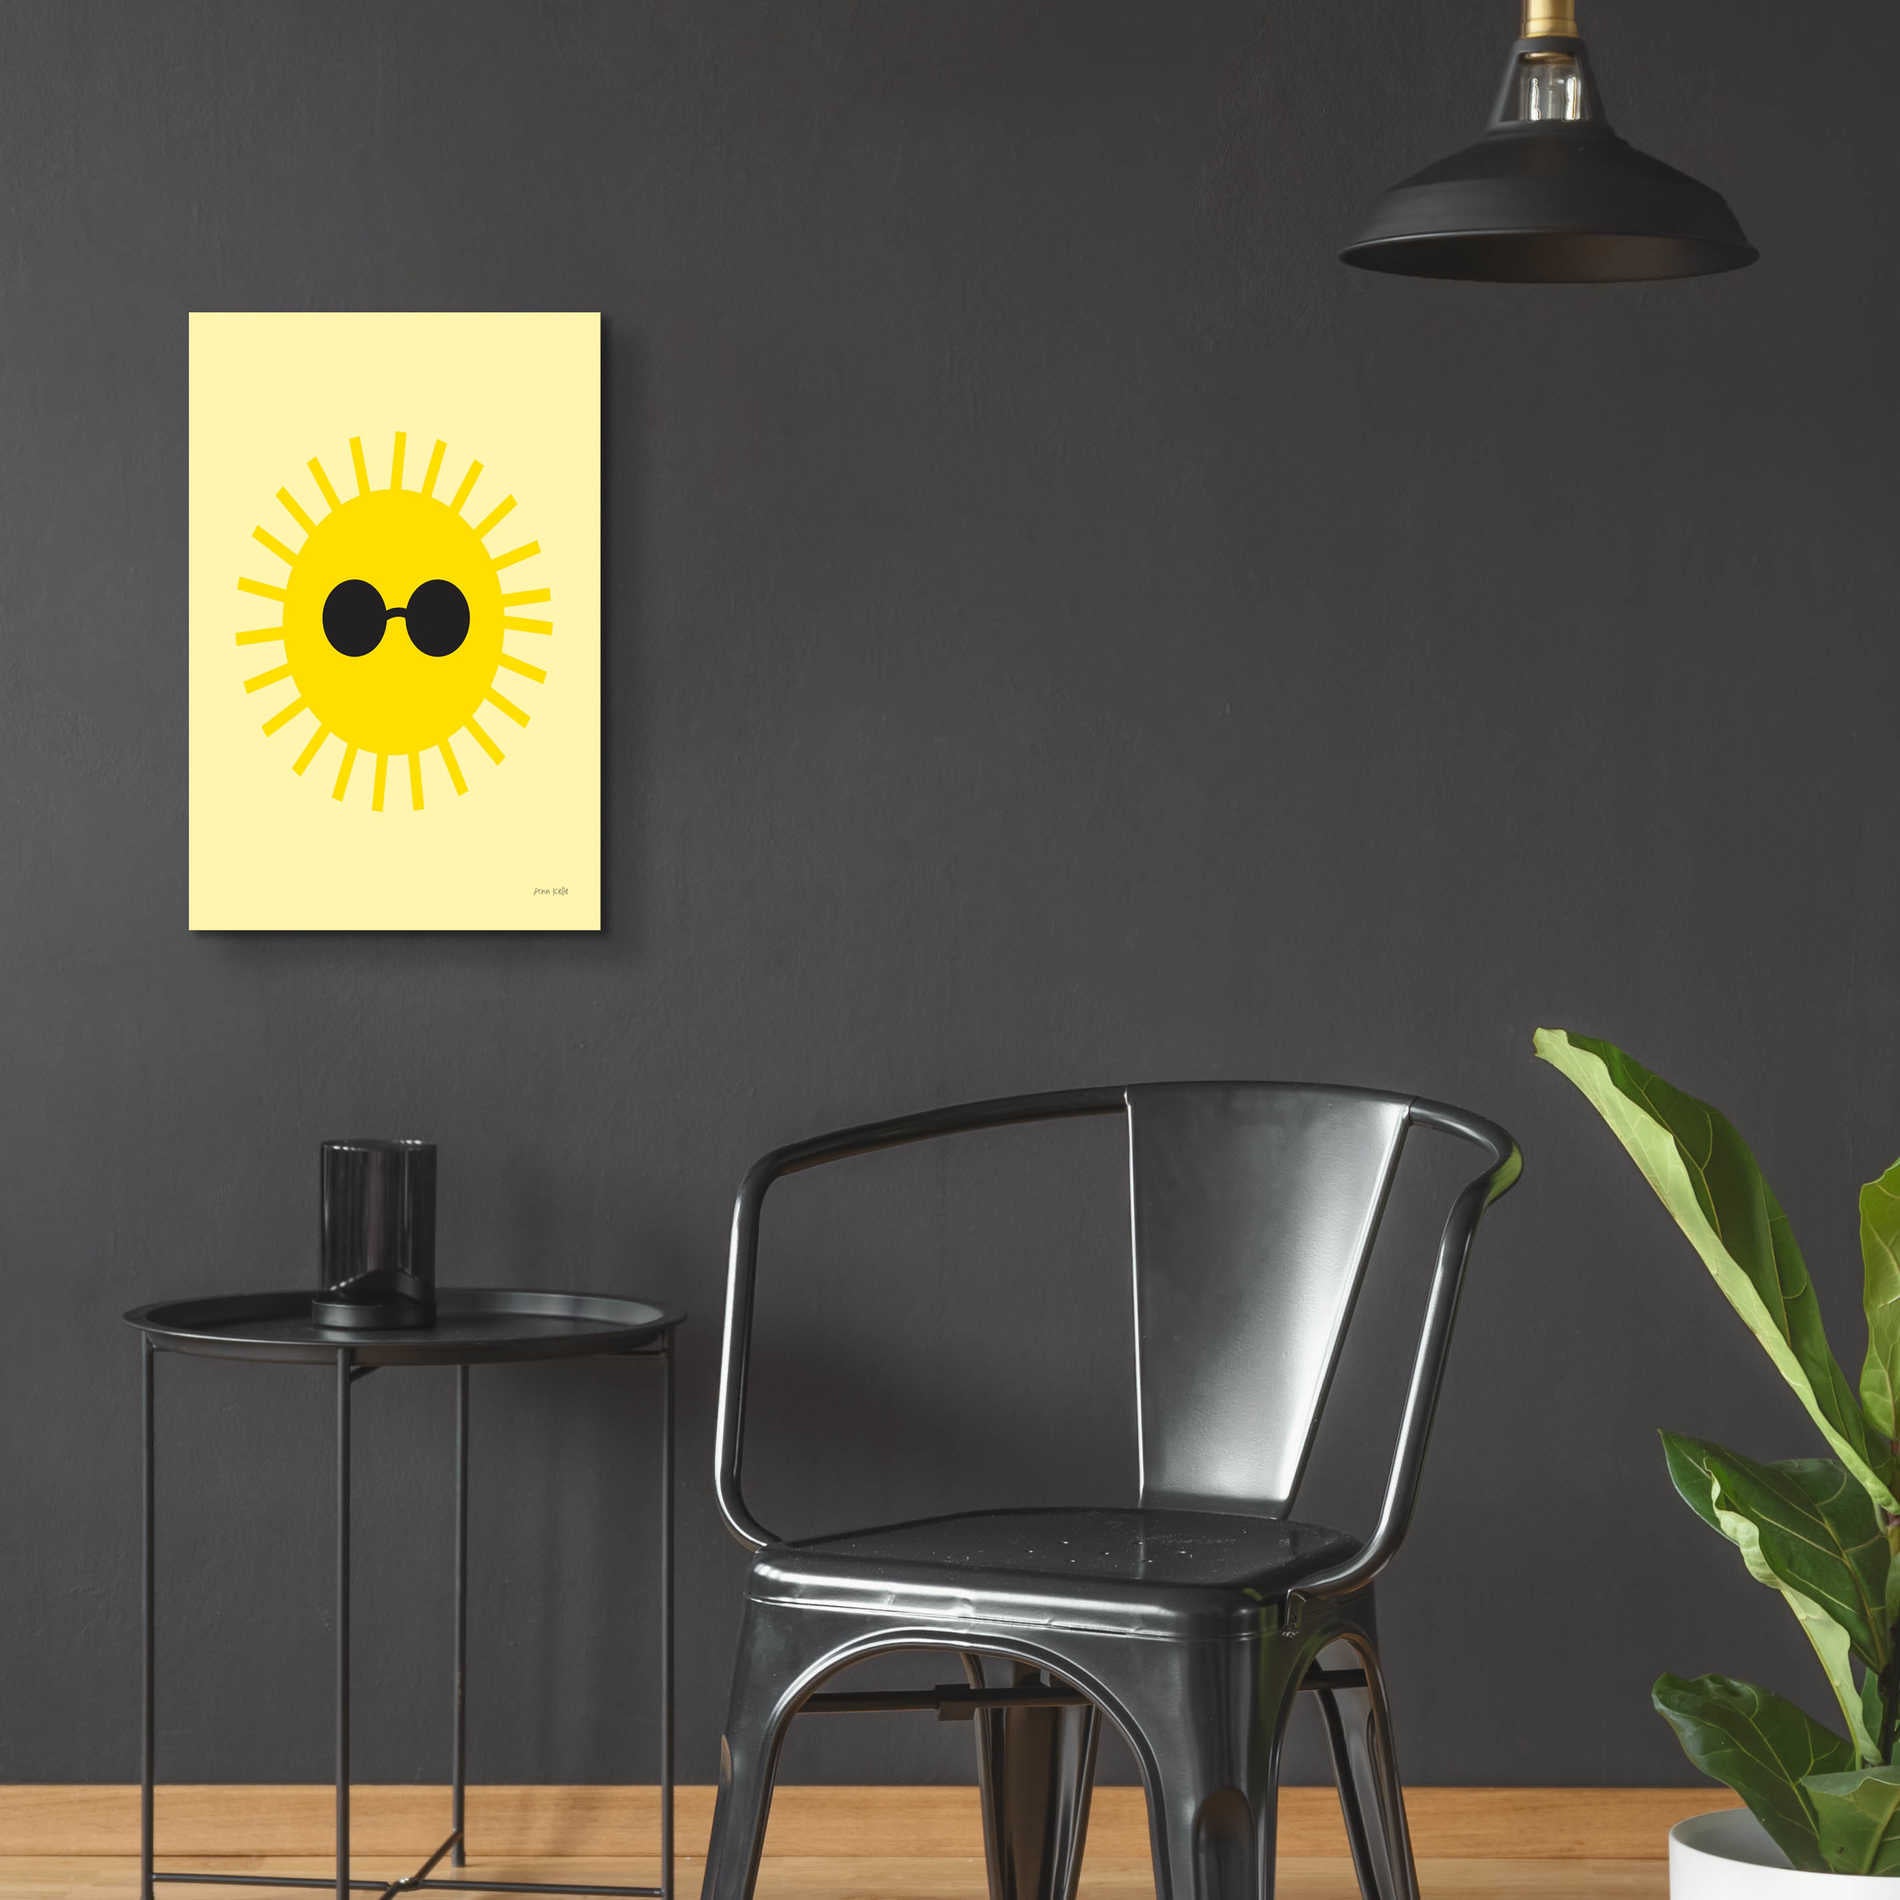 Epic Art 'Sunny' by Ann Kelle Designs, Acrylic Glass Wall Art,16x24